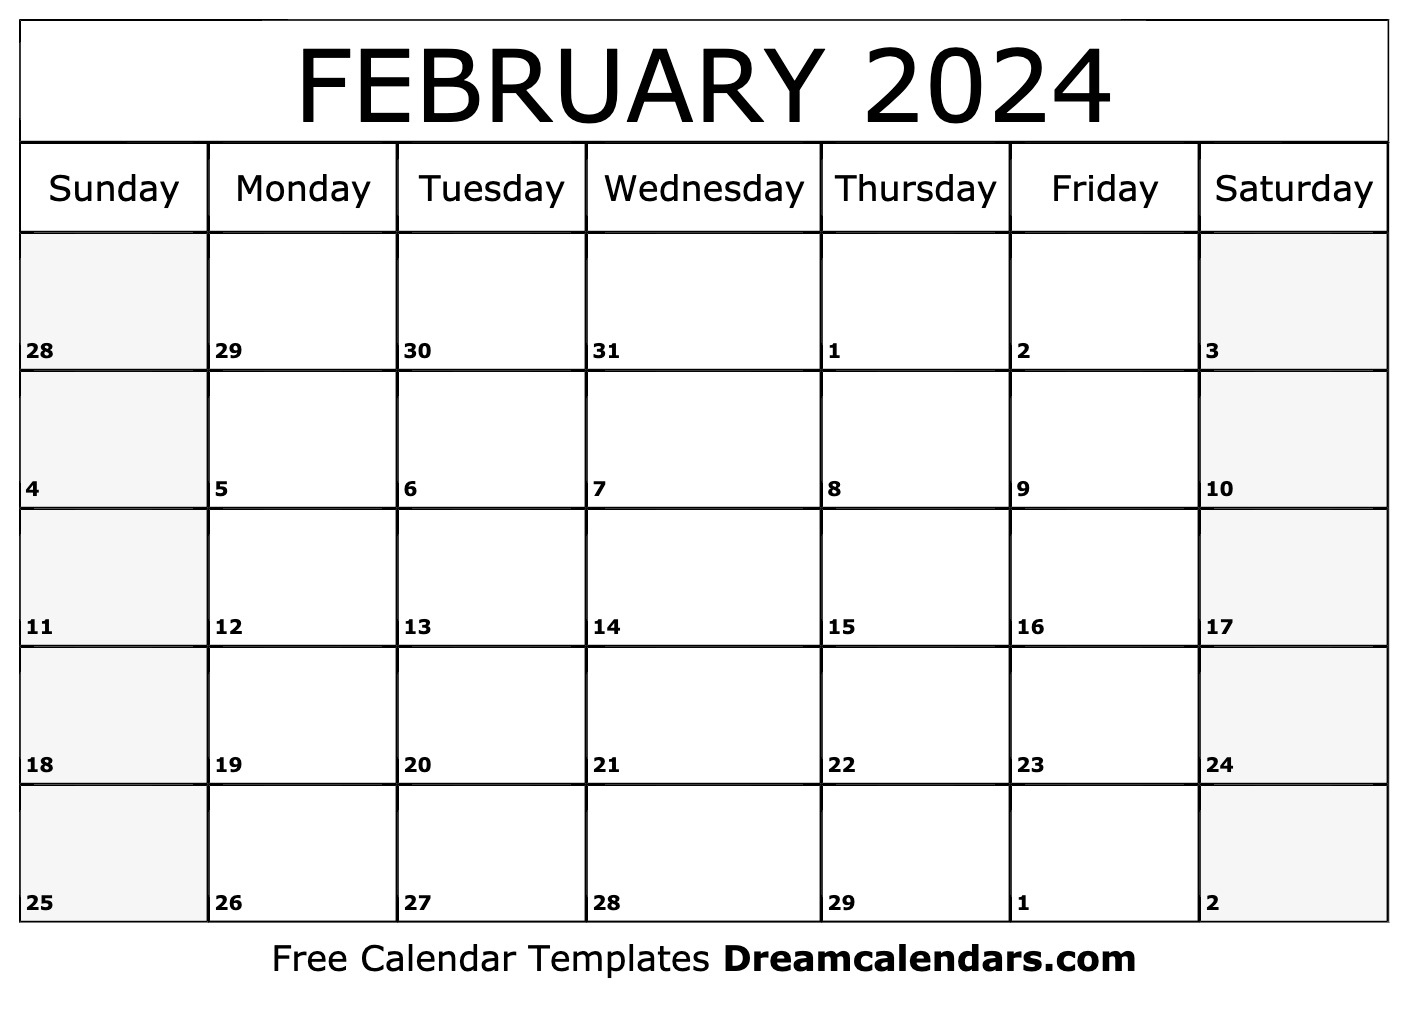 February 2024 Calendar February 2024 Calendar Free Blank Printable - Free Printable Blank Calendar February 2024